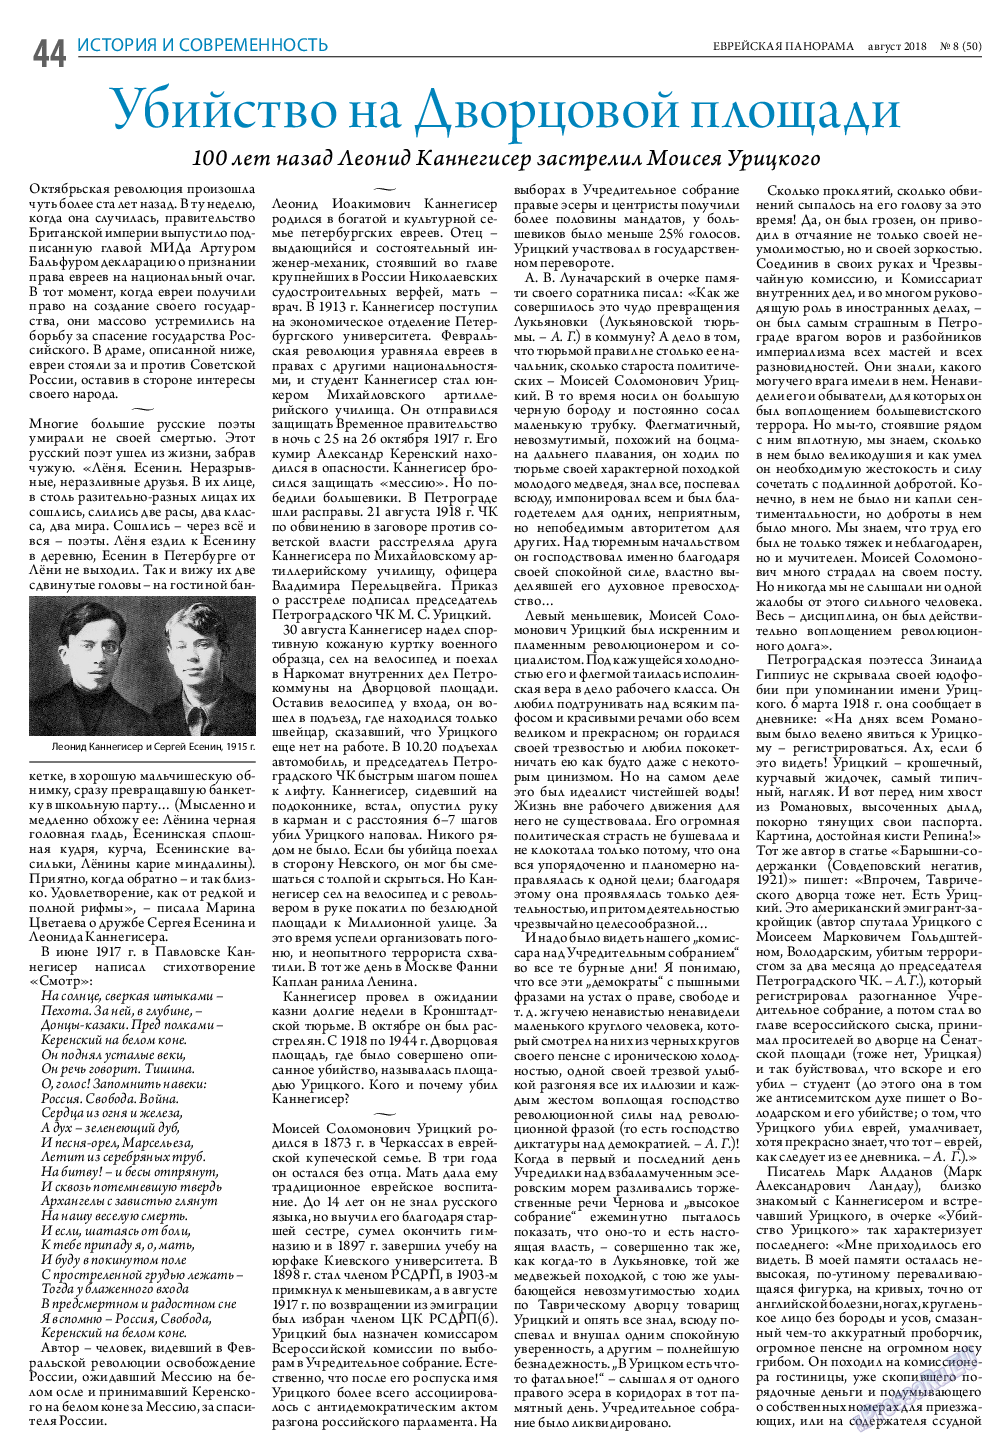 Еврейская панорама, газета. 2018 №8 стр.44